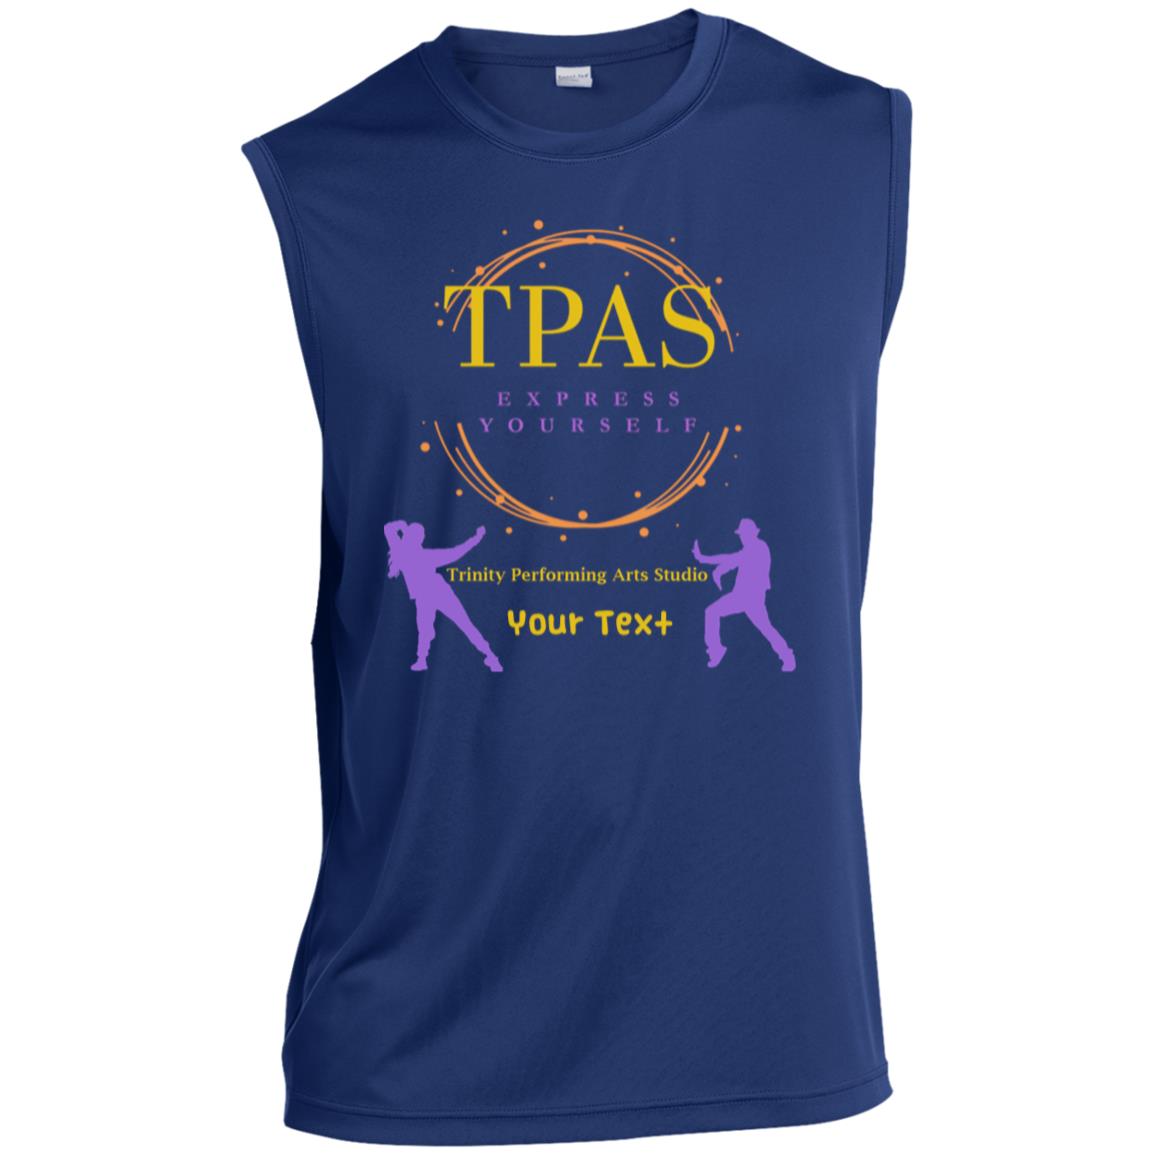 TPAS Men’s Sleeveless Performance Tee